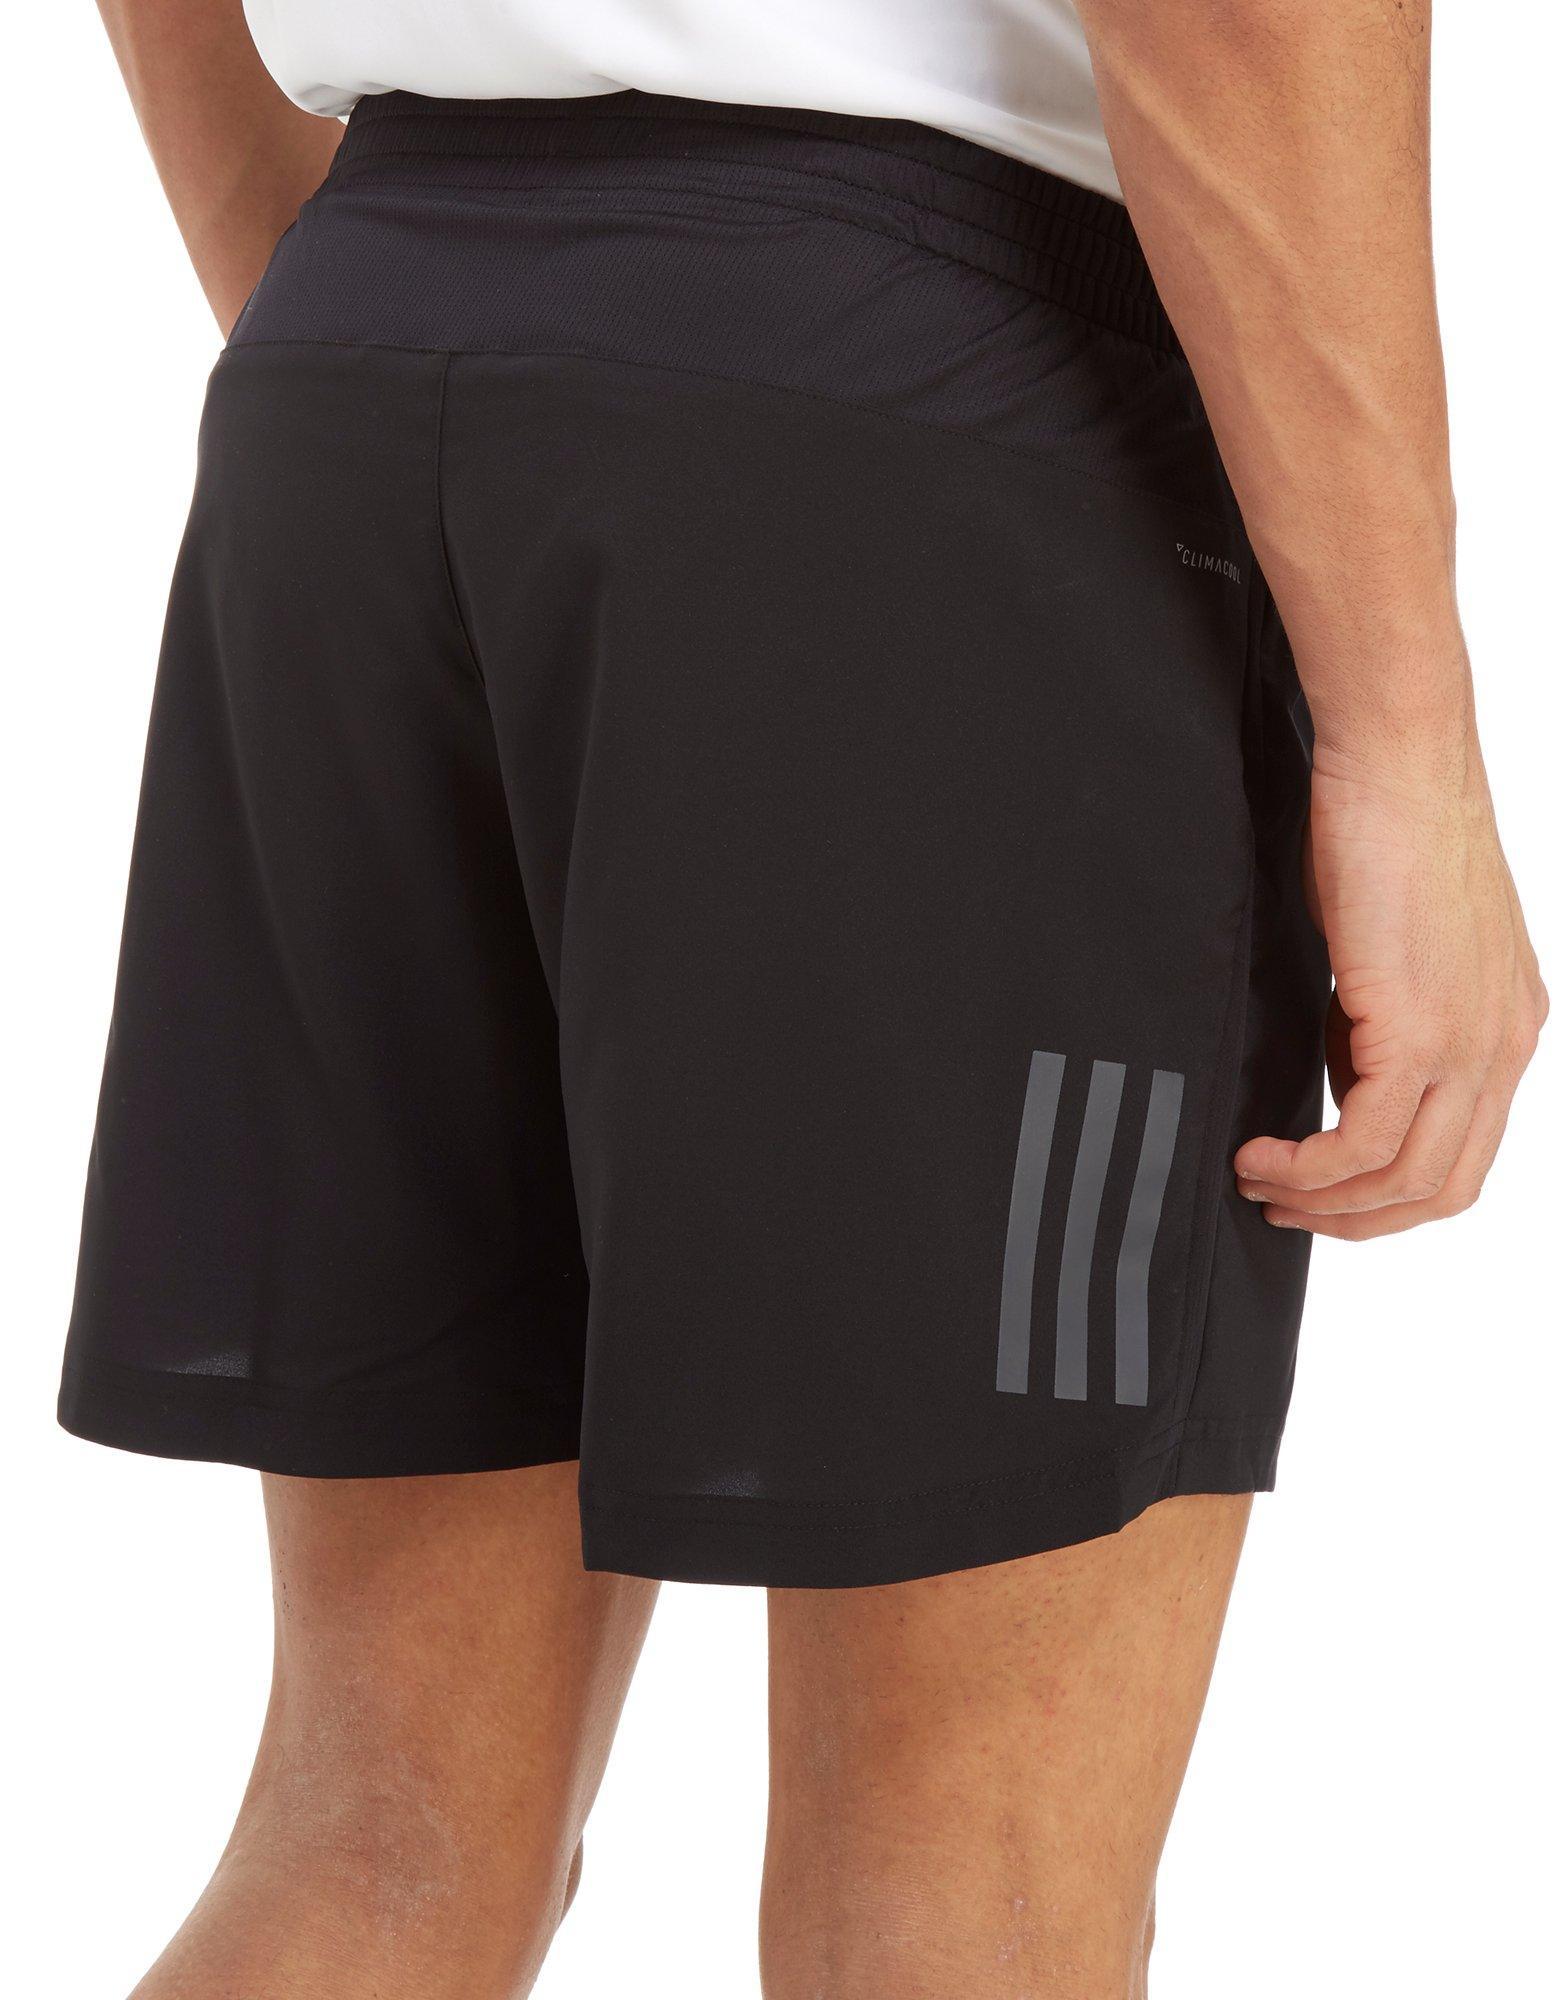 adidas response 7 inch shorts men's